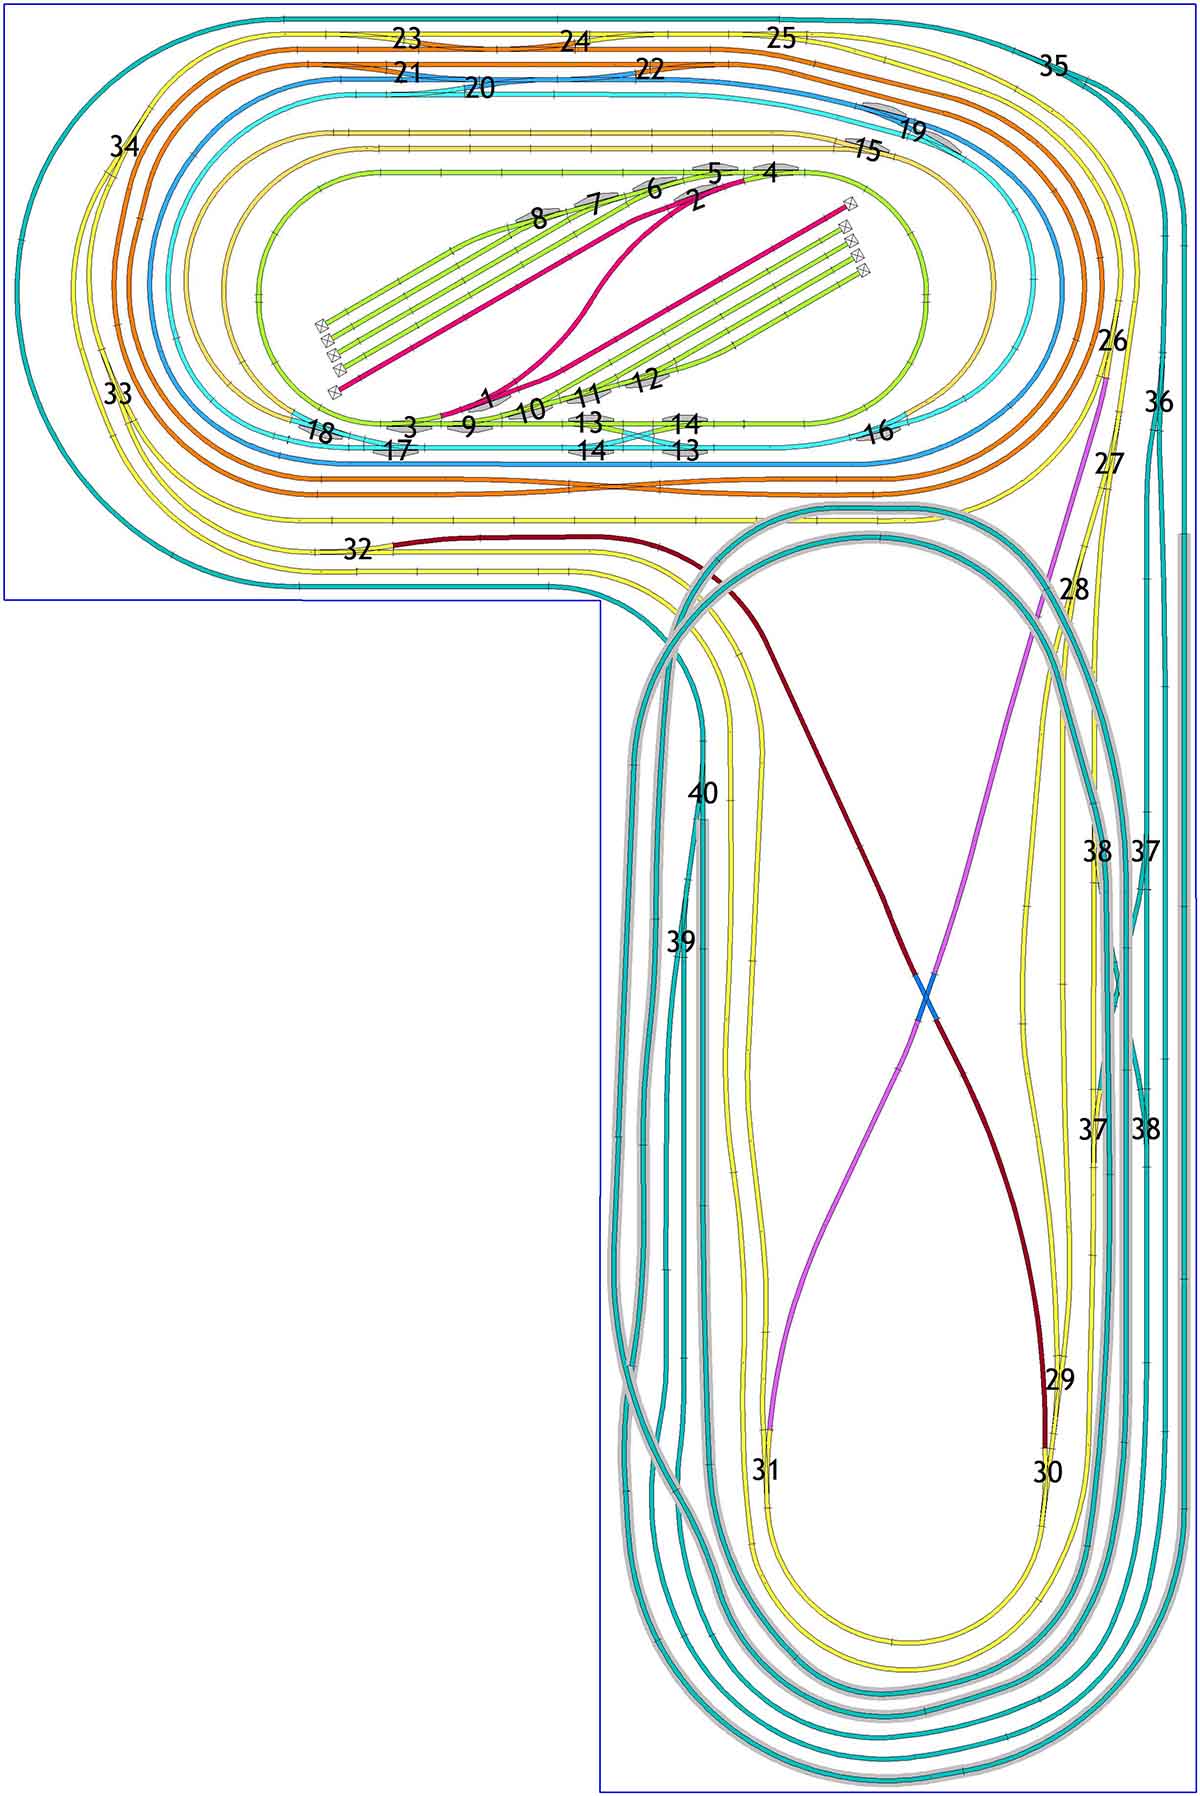 three layer track plan